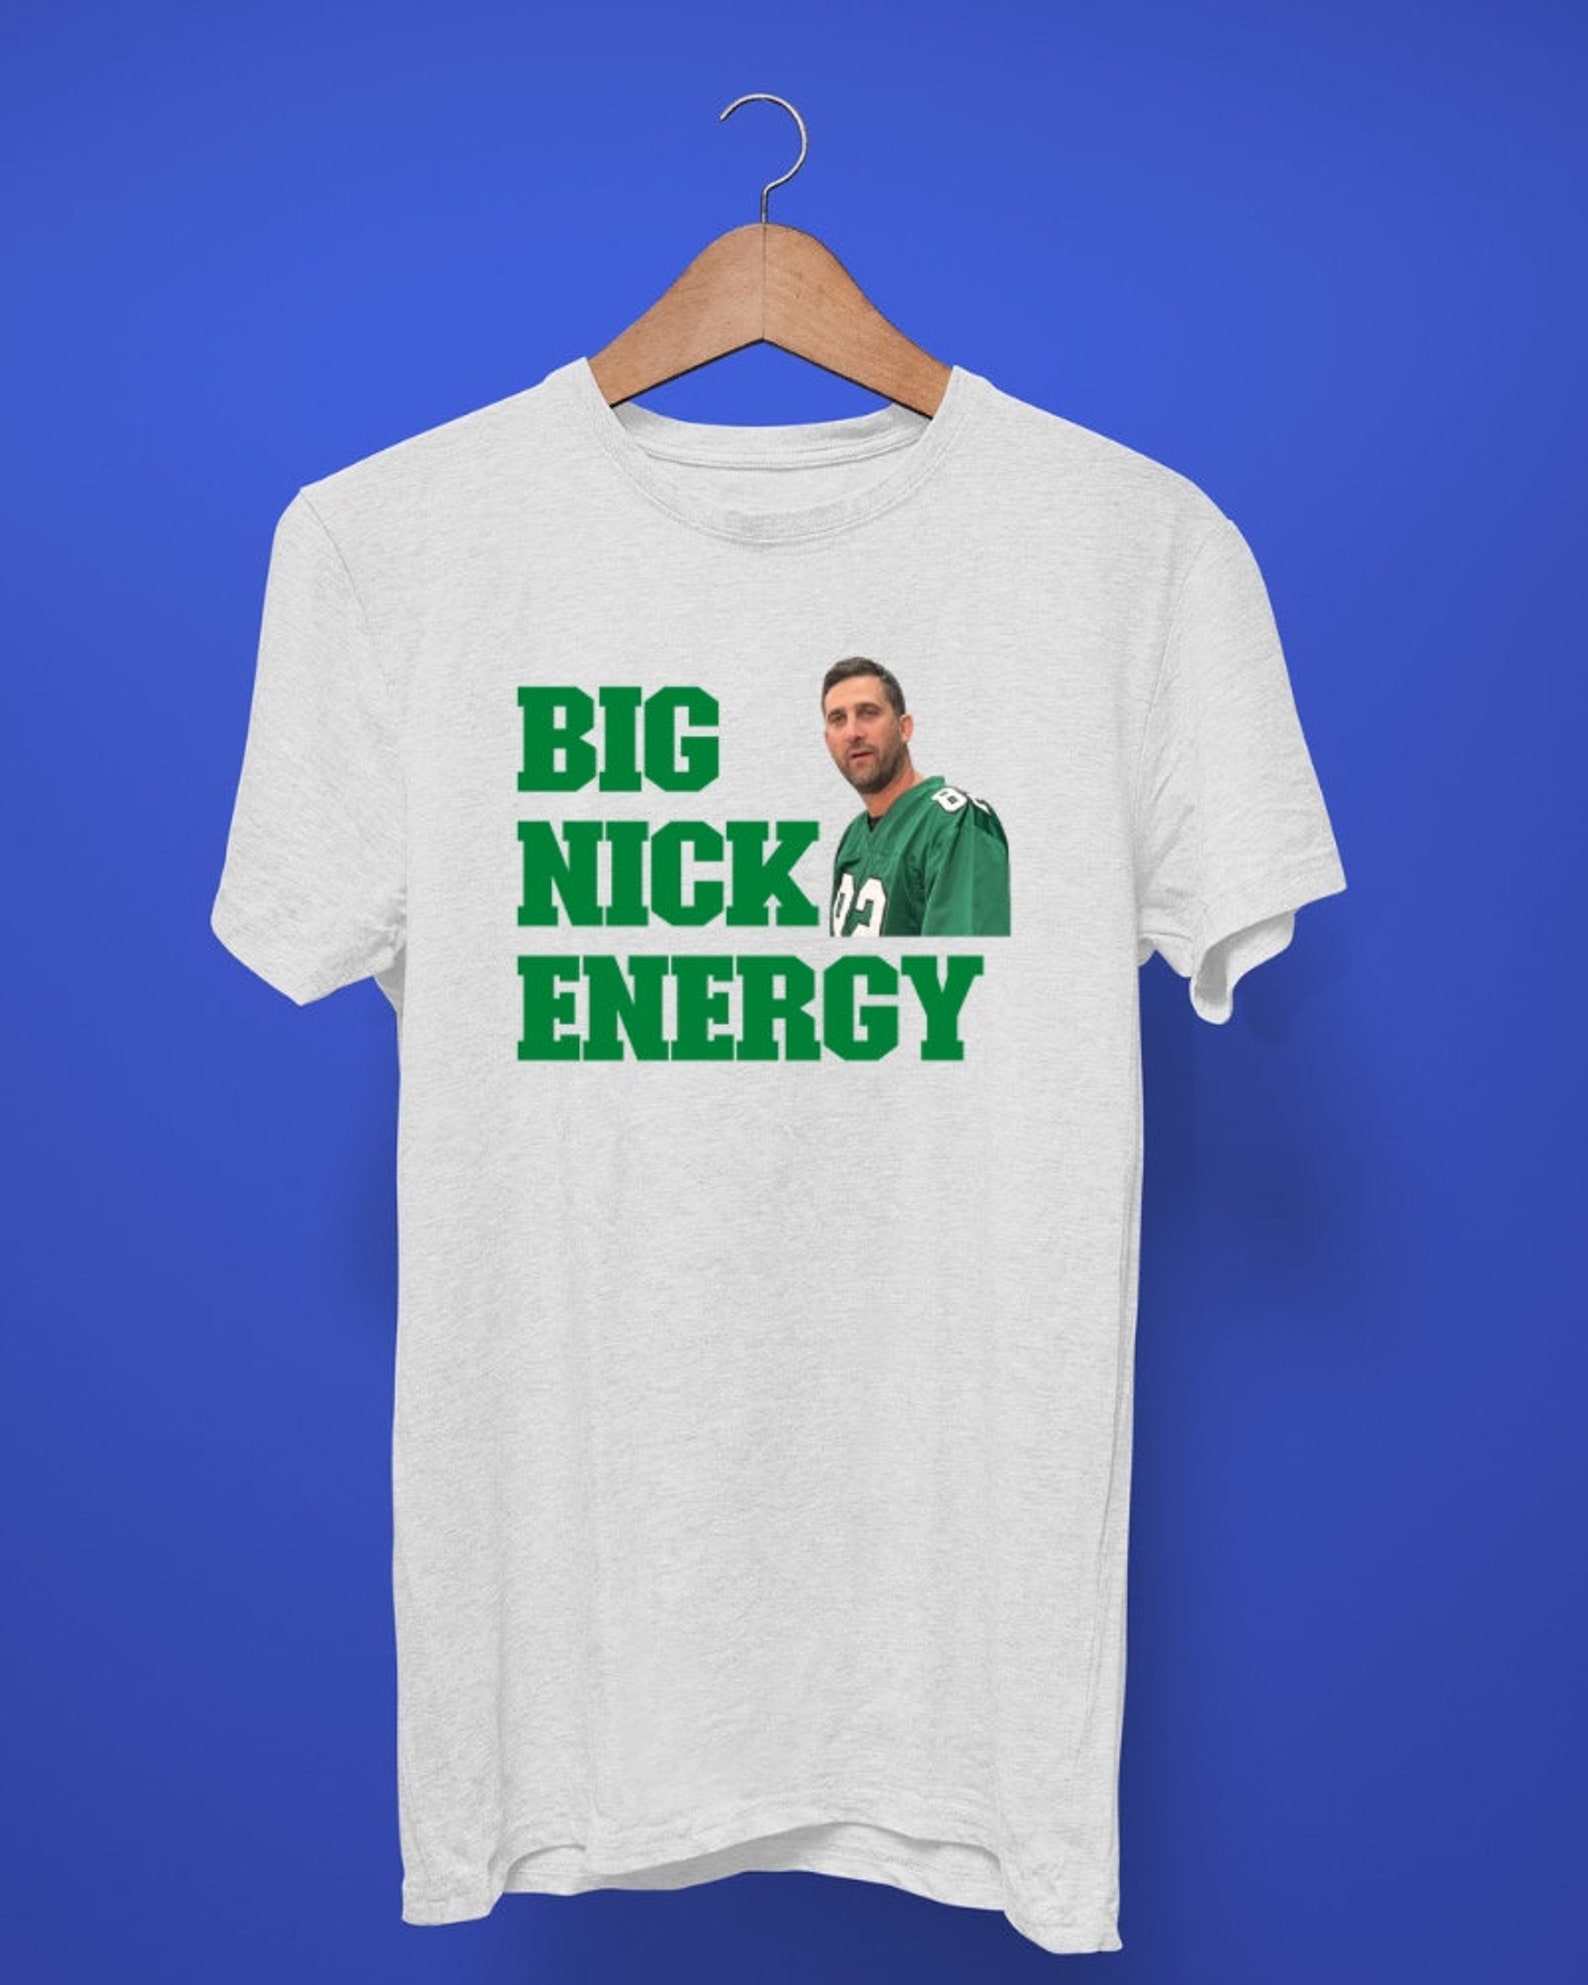 RoeBot on X: 'BIG NICK ENERGY funny philadelphia eagles shirt #gift # Philadelphia #Eagles #funny #shirt #BigNickEnergy #LilNitwits #   